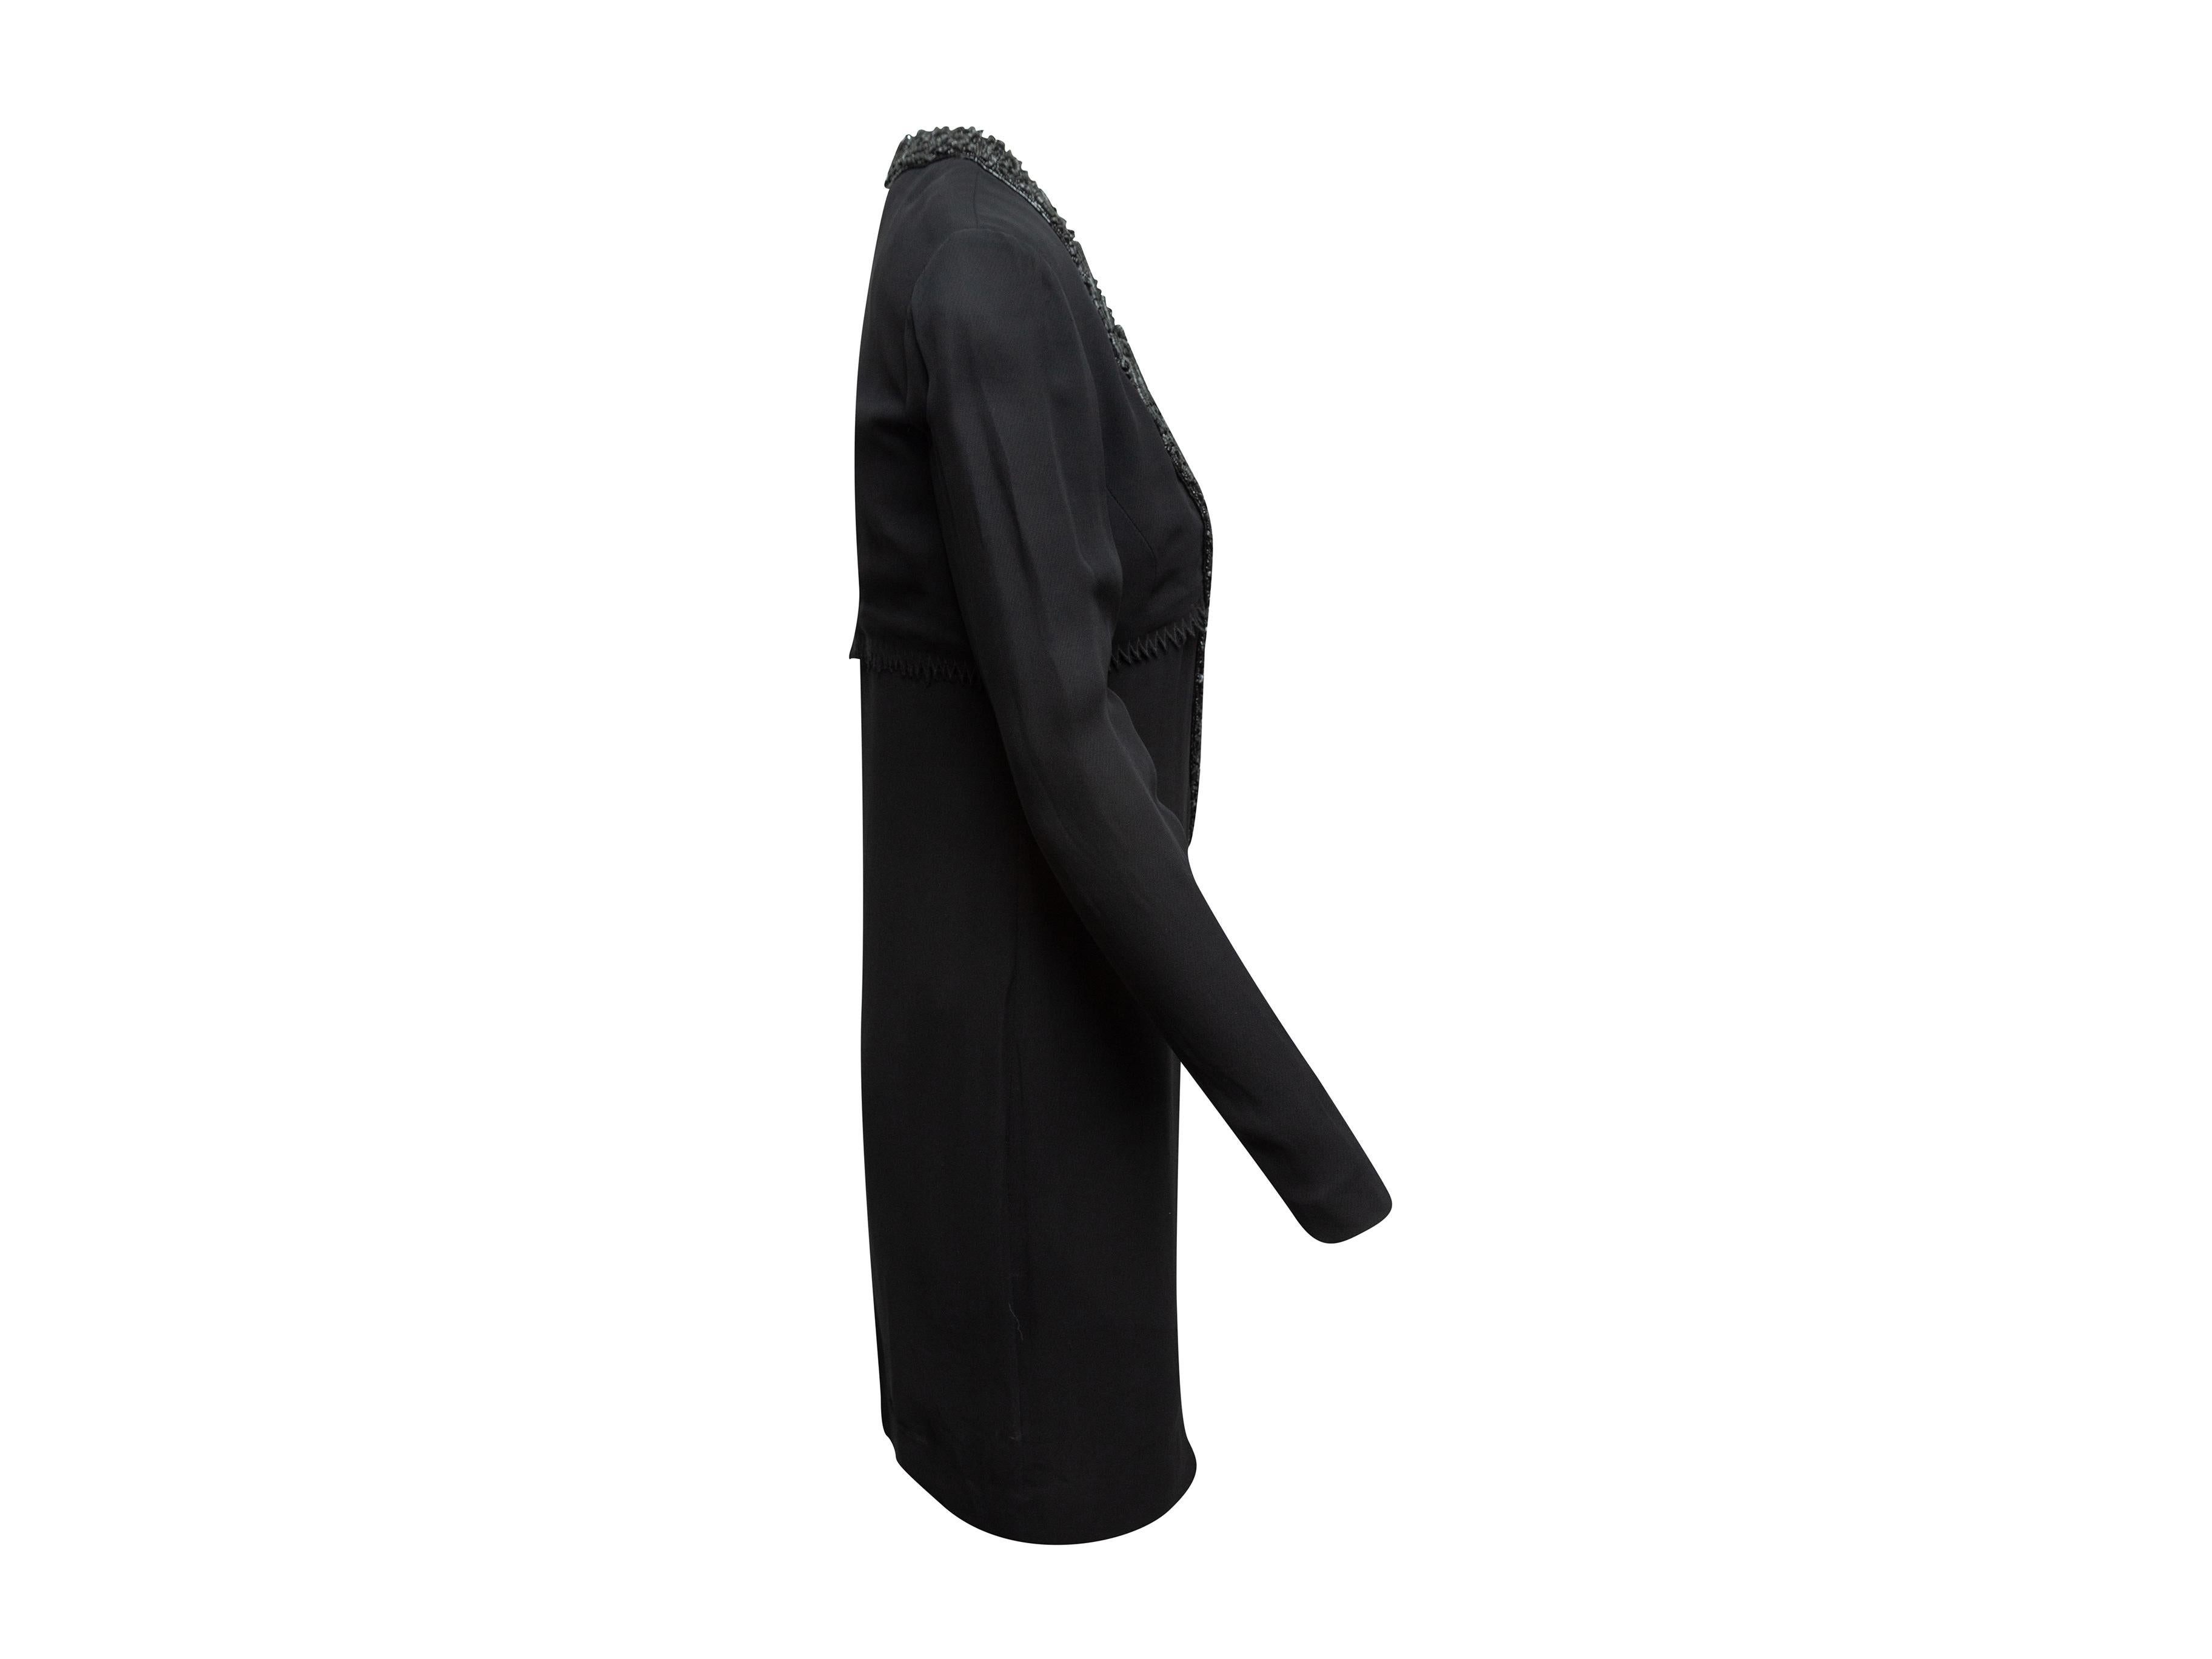 Product details: Vintage black long sleeve dress by Karl Lagerfeld. V-neck featuring bead embellishments. Designer size 40. 29